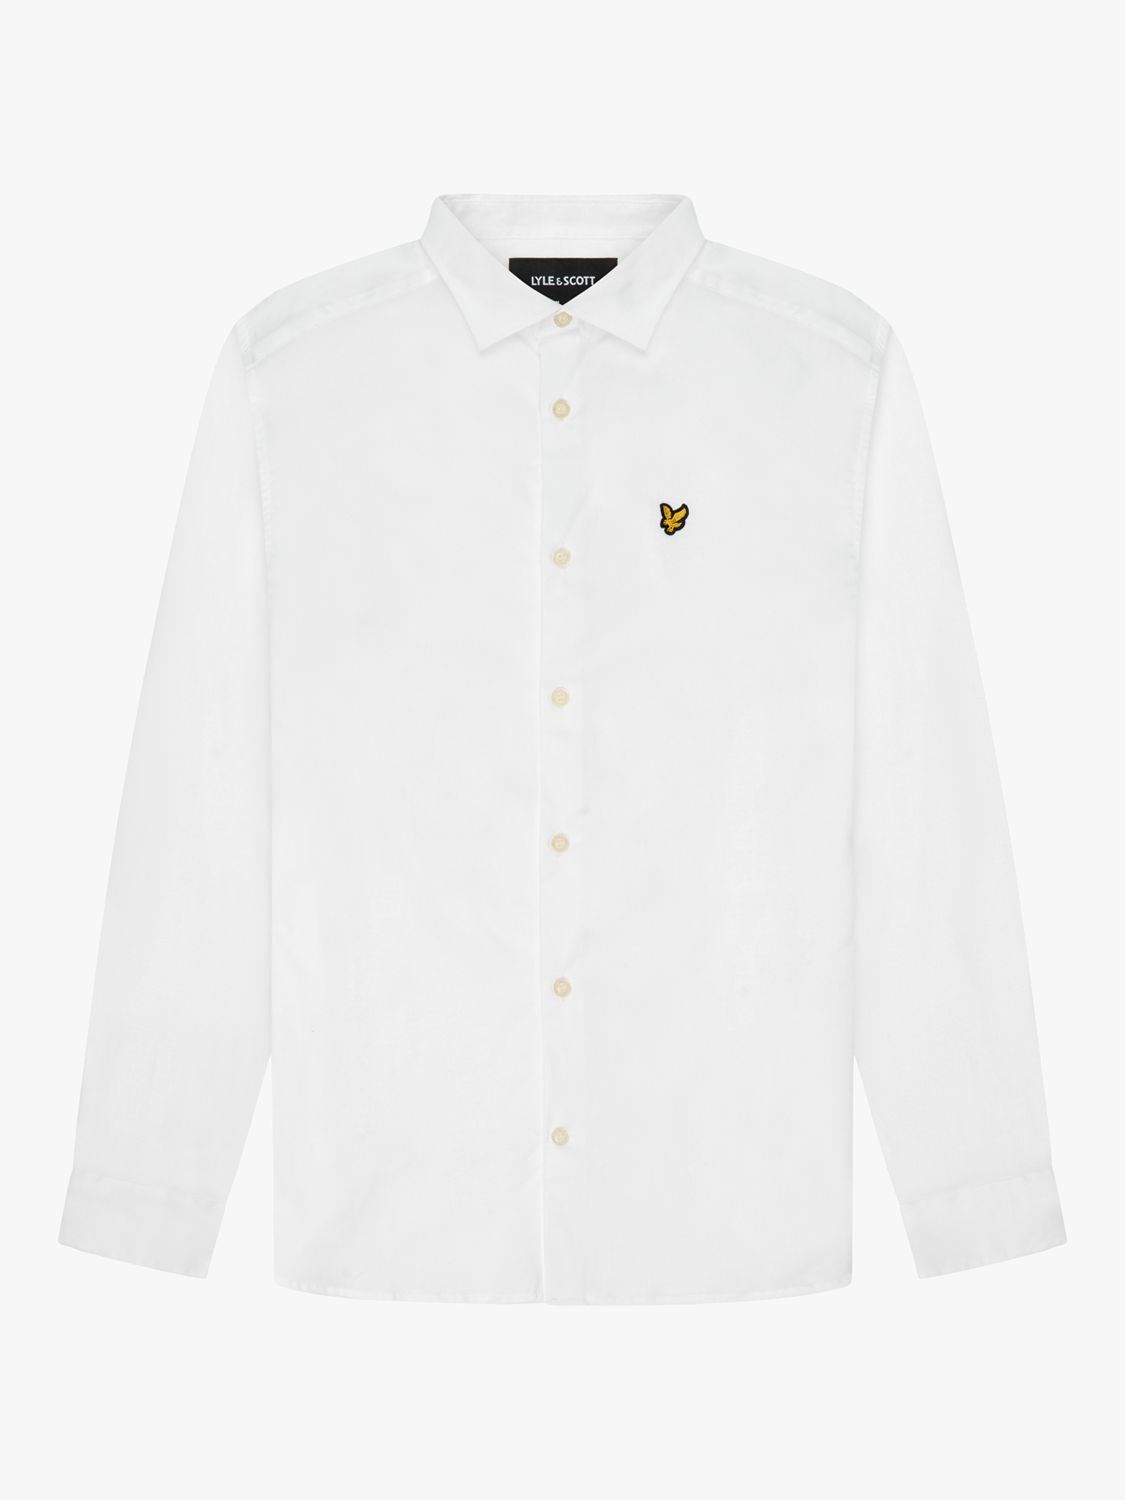 Lyle & Scott Long Sleeve Poplin Shirt, White, XS